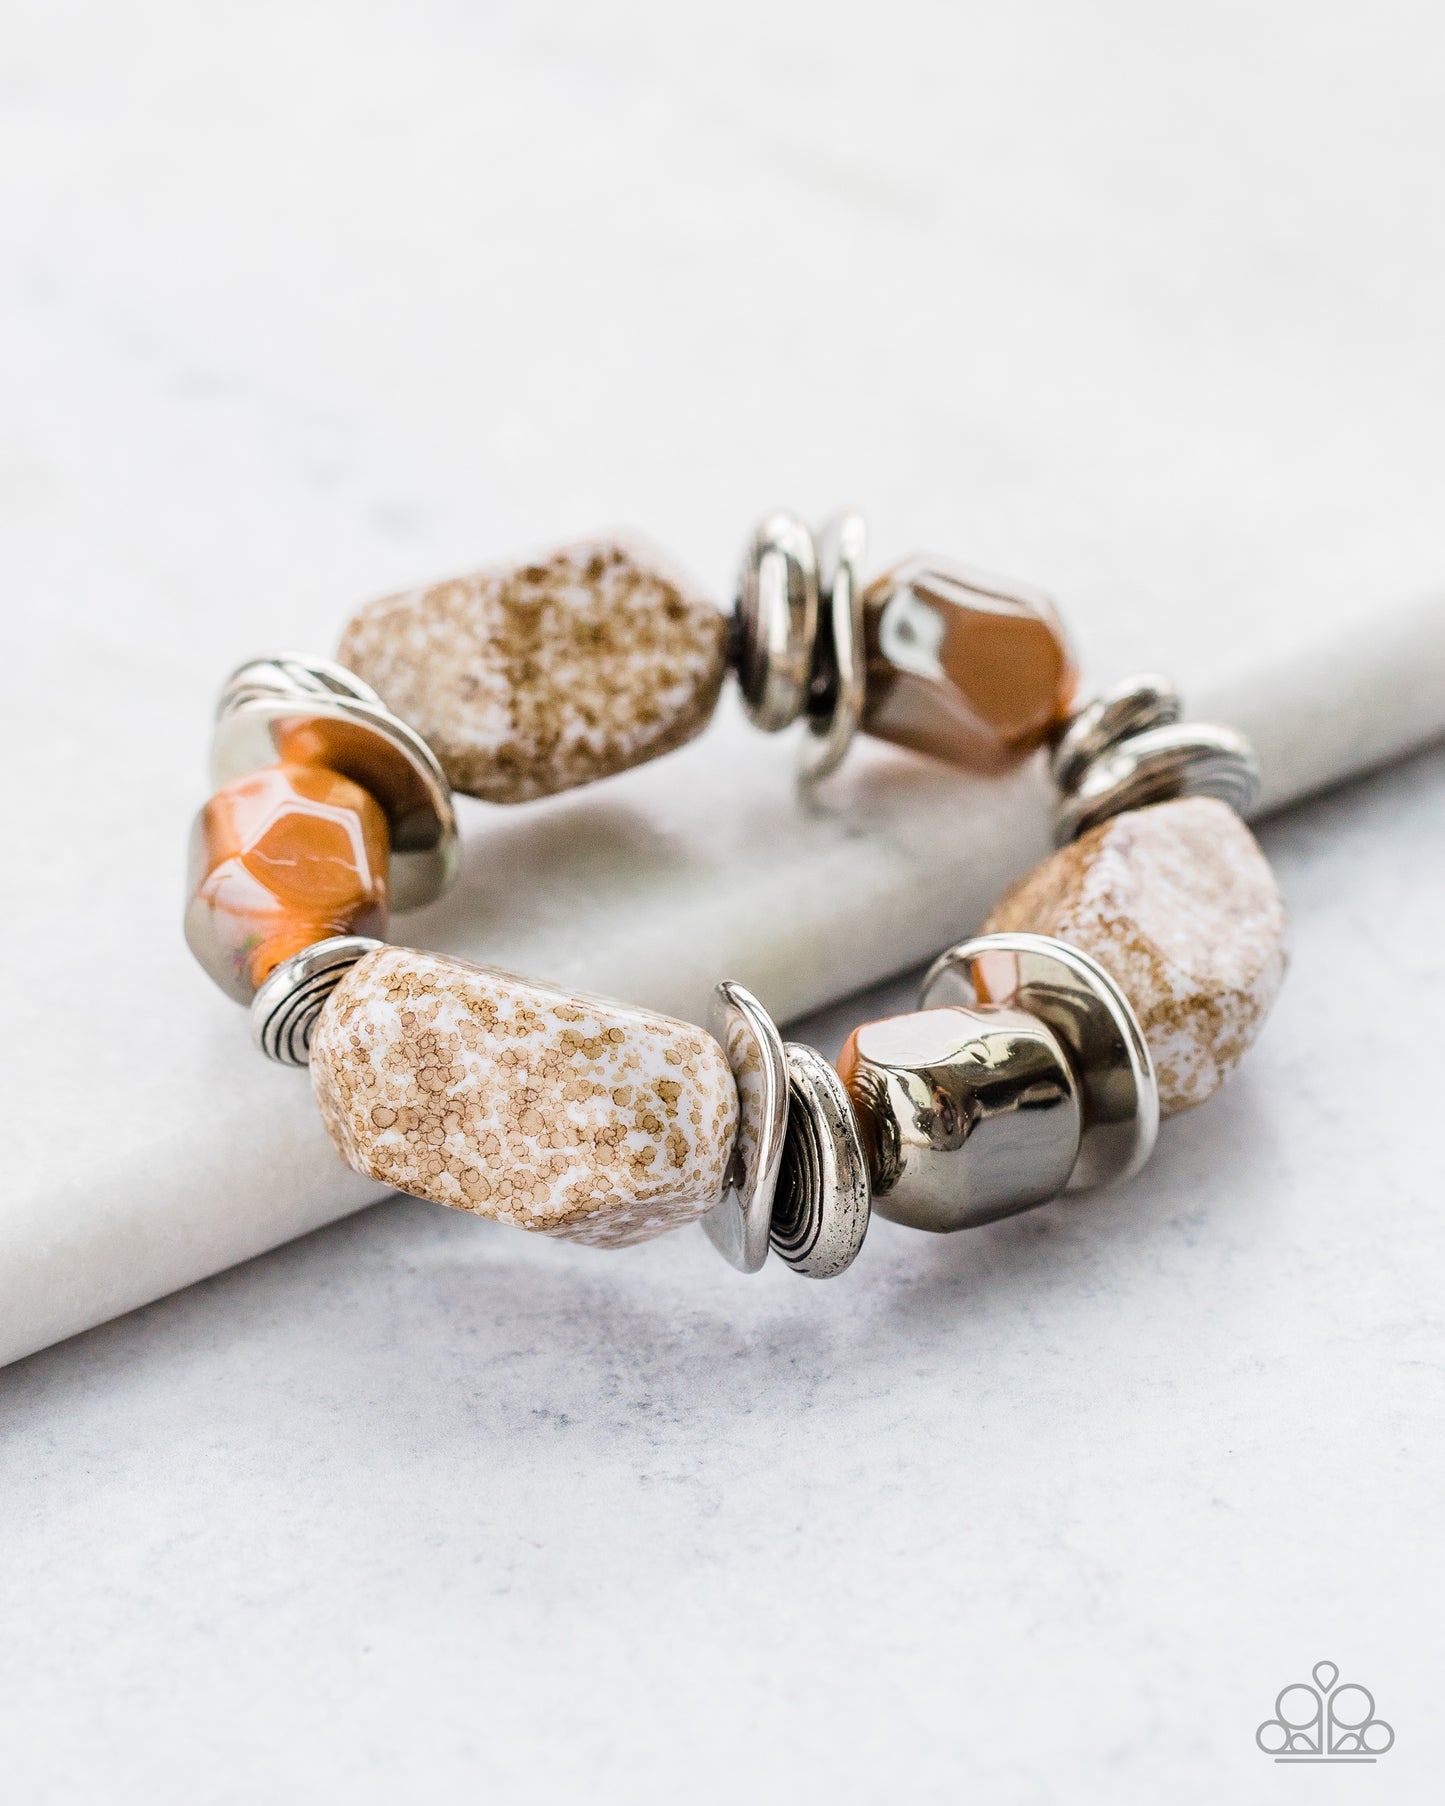 In Good Glazes - Peach/Brown necklace w/ matching bracelet